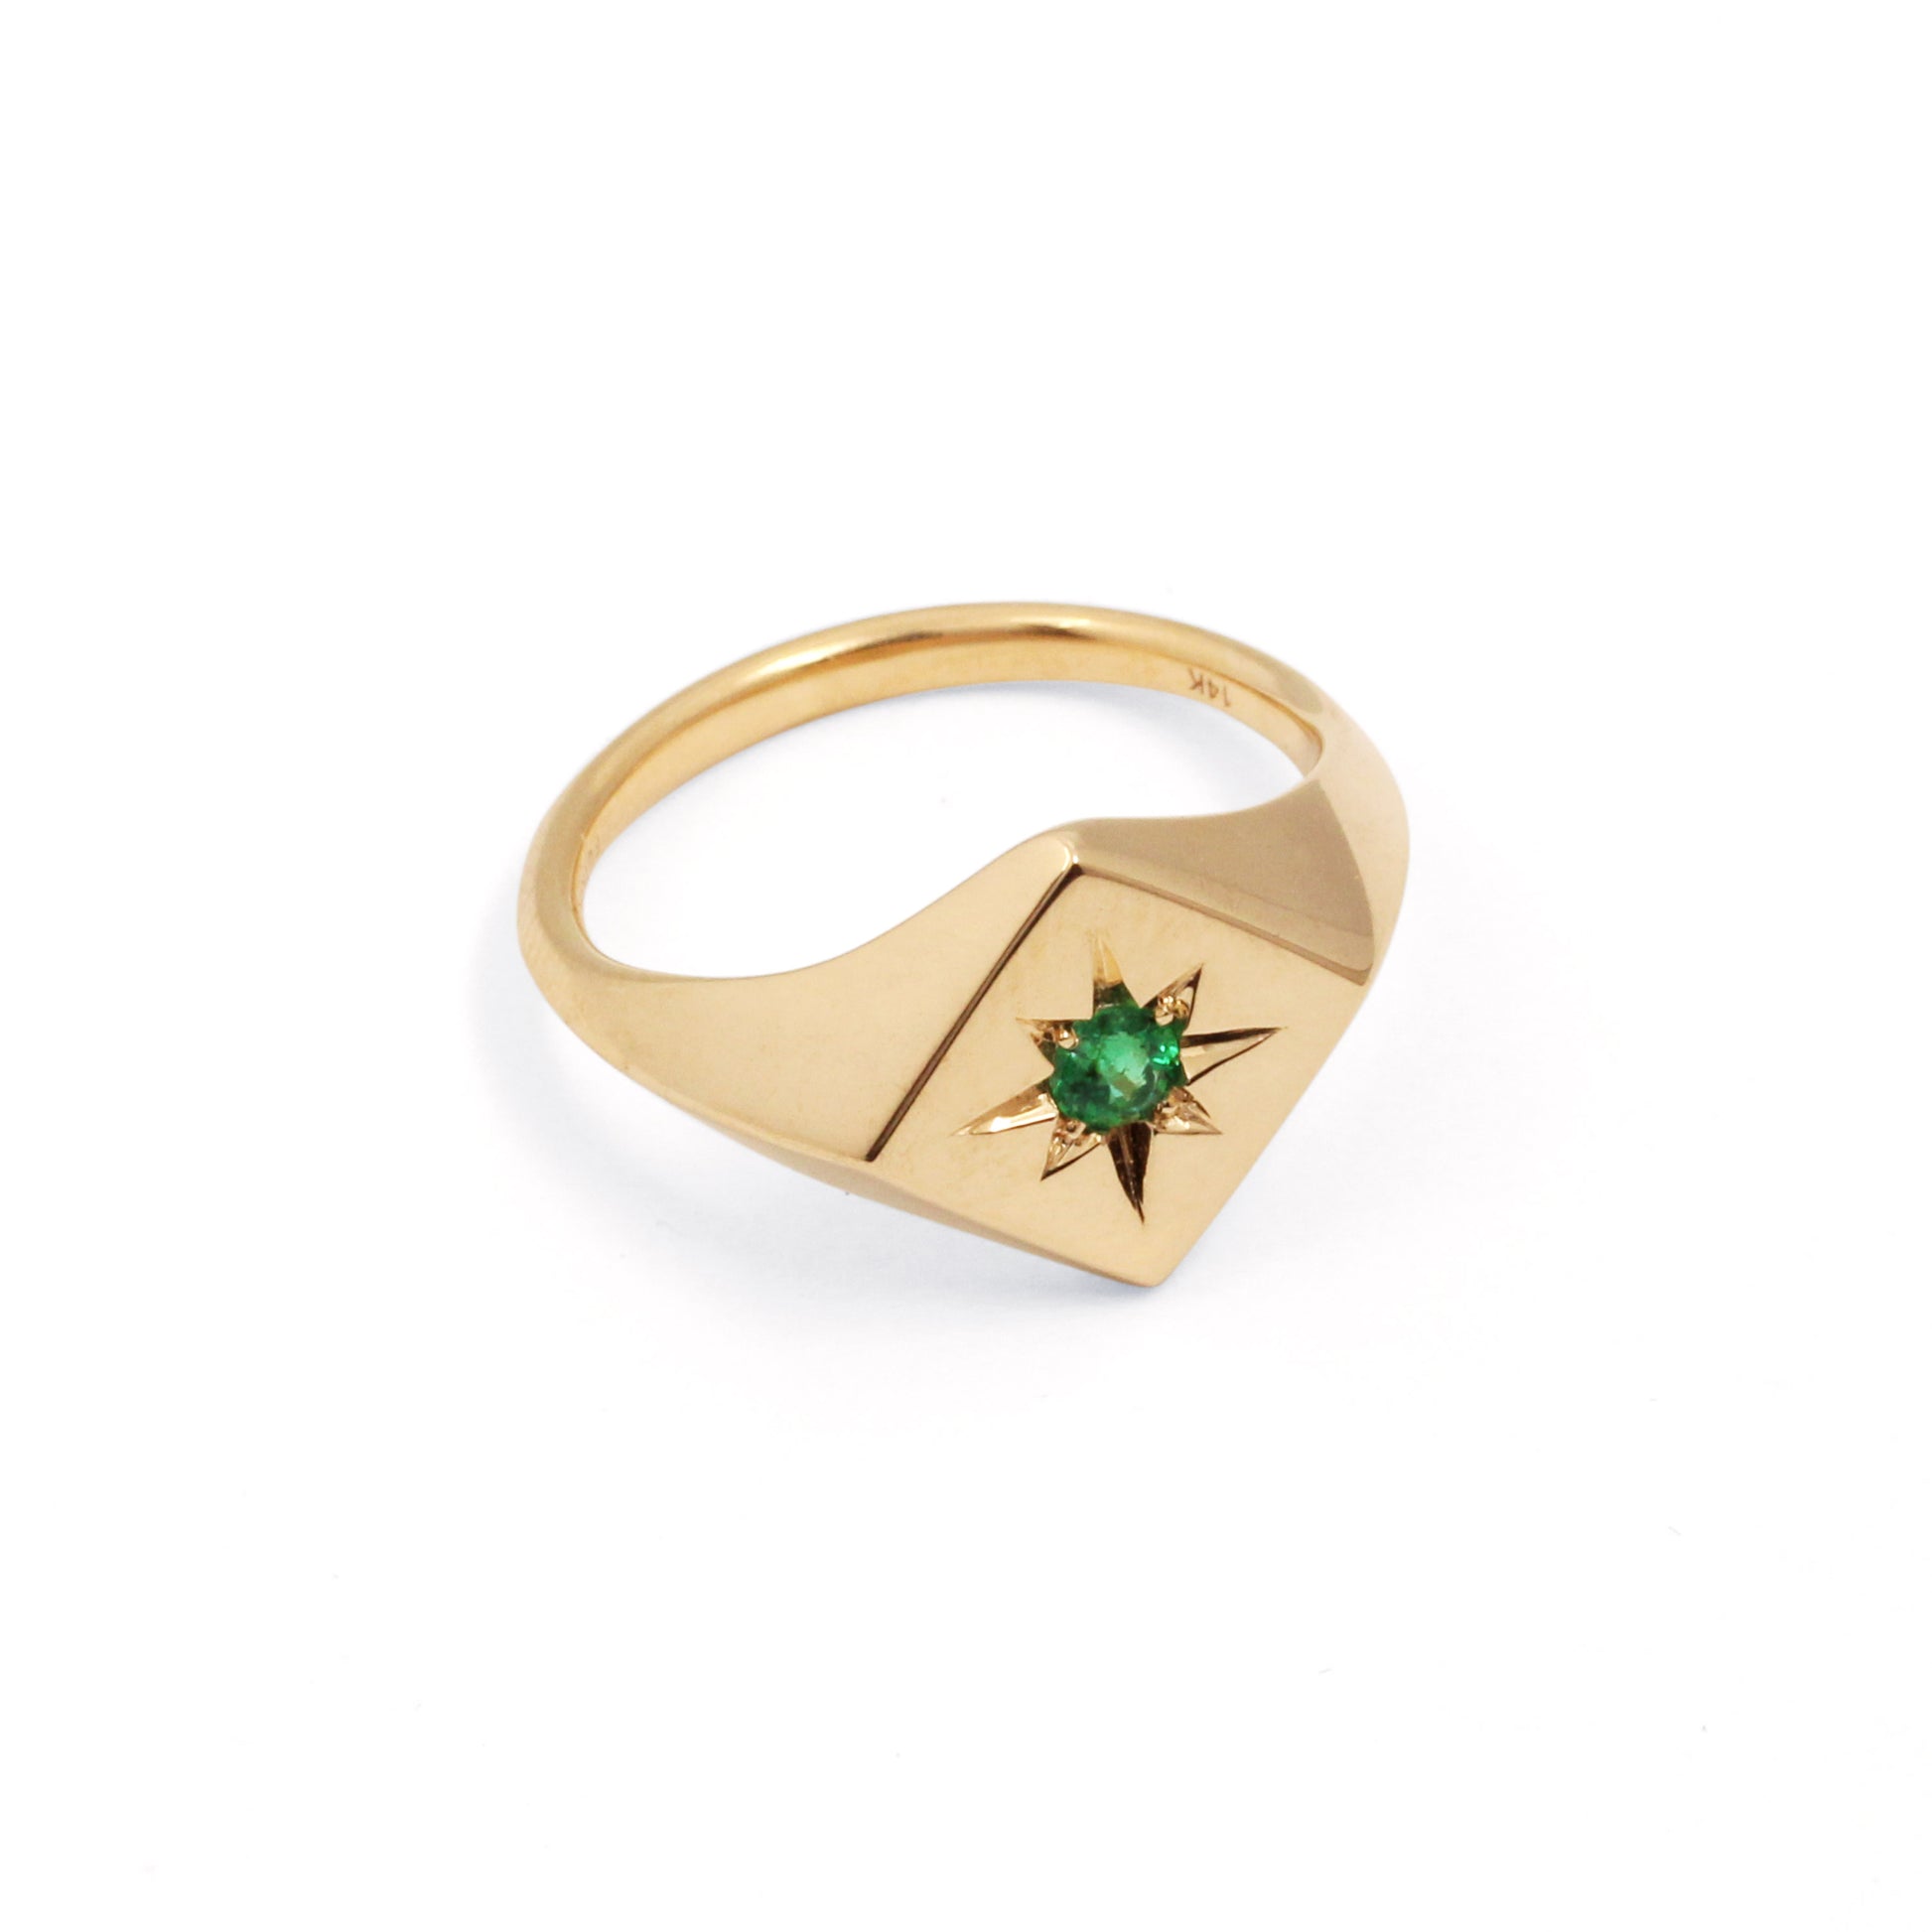 North Star Signet Ring with Emerald - Futaba Hayashi